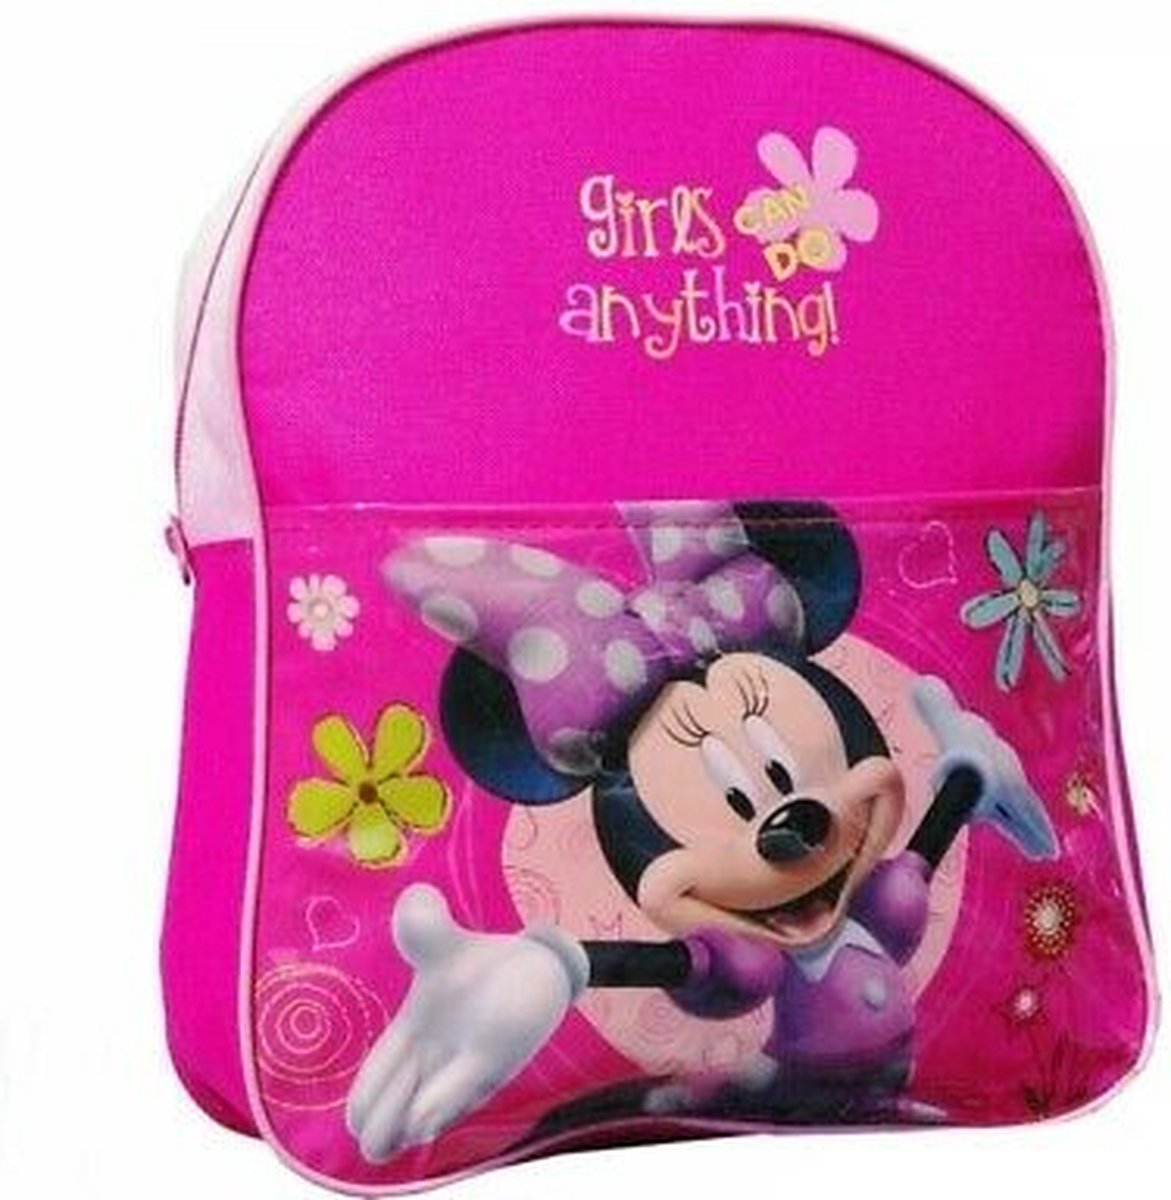 Disney Junior - Kinder Rugzak - Minnie Mouse - Girls can do anything - 25 x 8 x 30 cm (lxbxh) - Roze